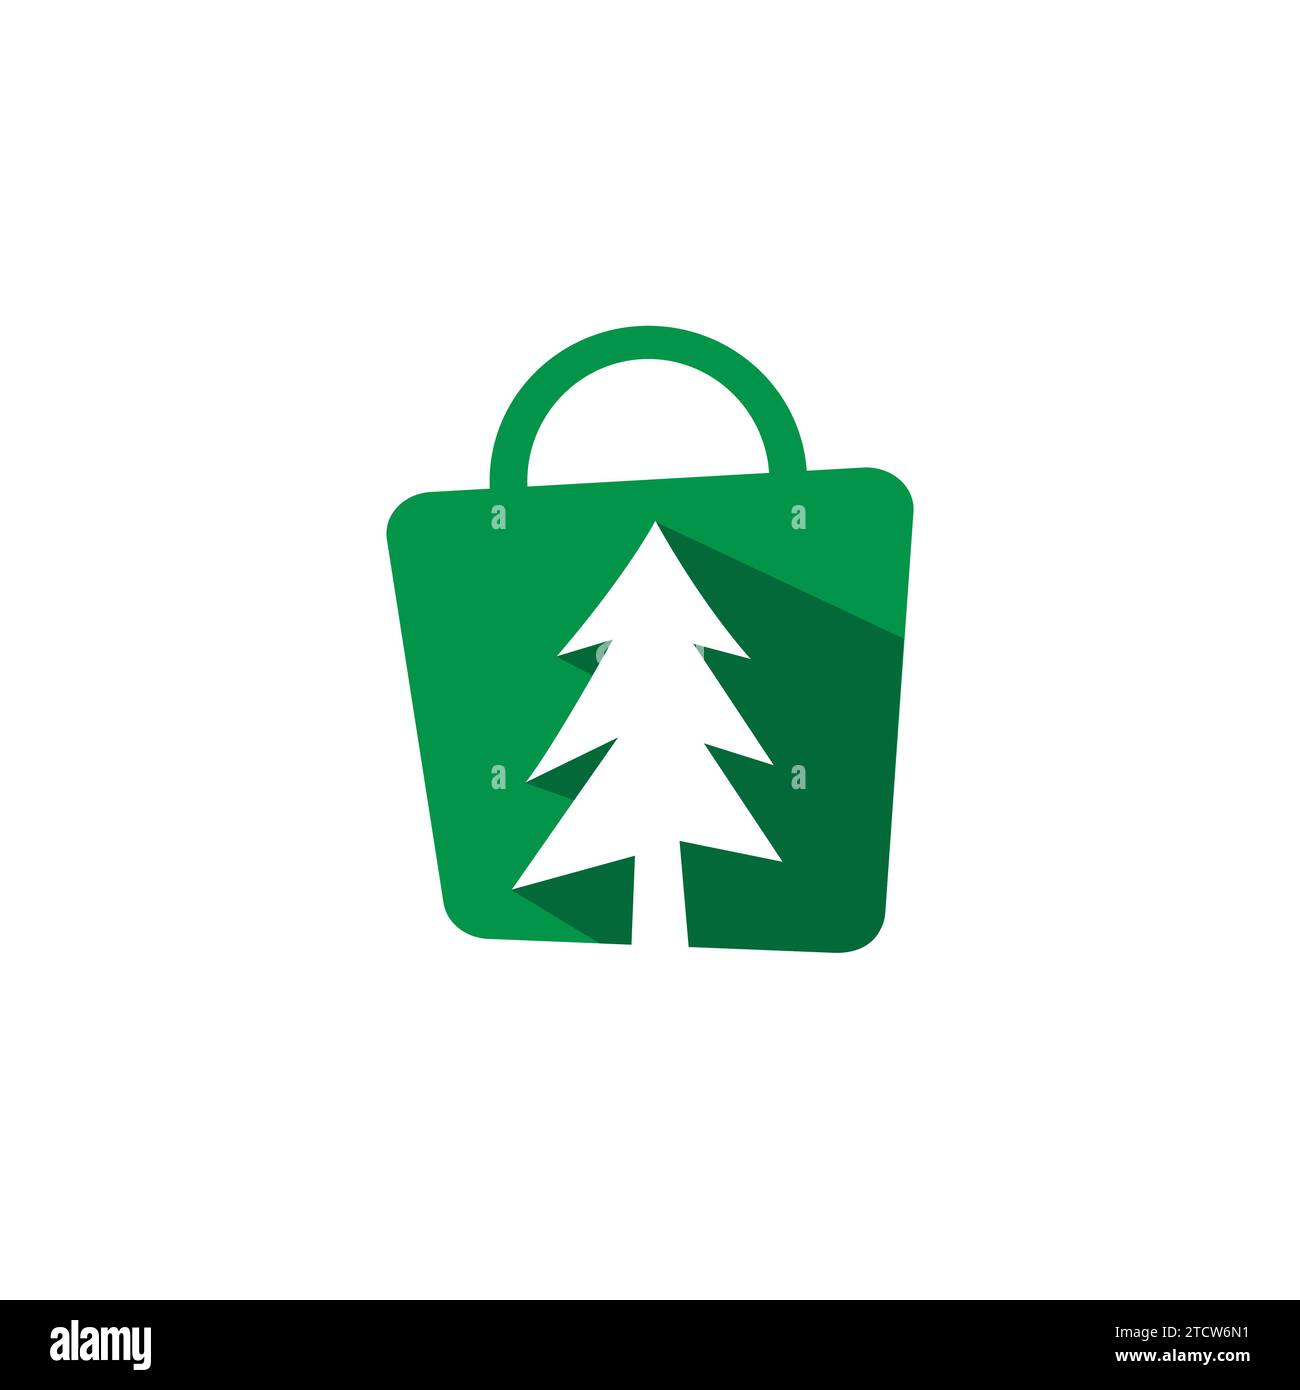 Arbre de pin vert avec logo de sac à provisions logo symbole d'illustration d'icône de vecteur Illustration de Vecteur